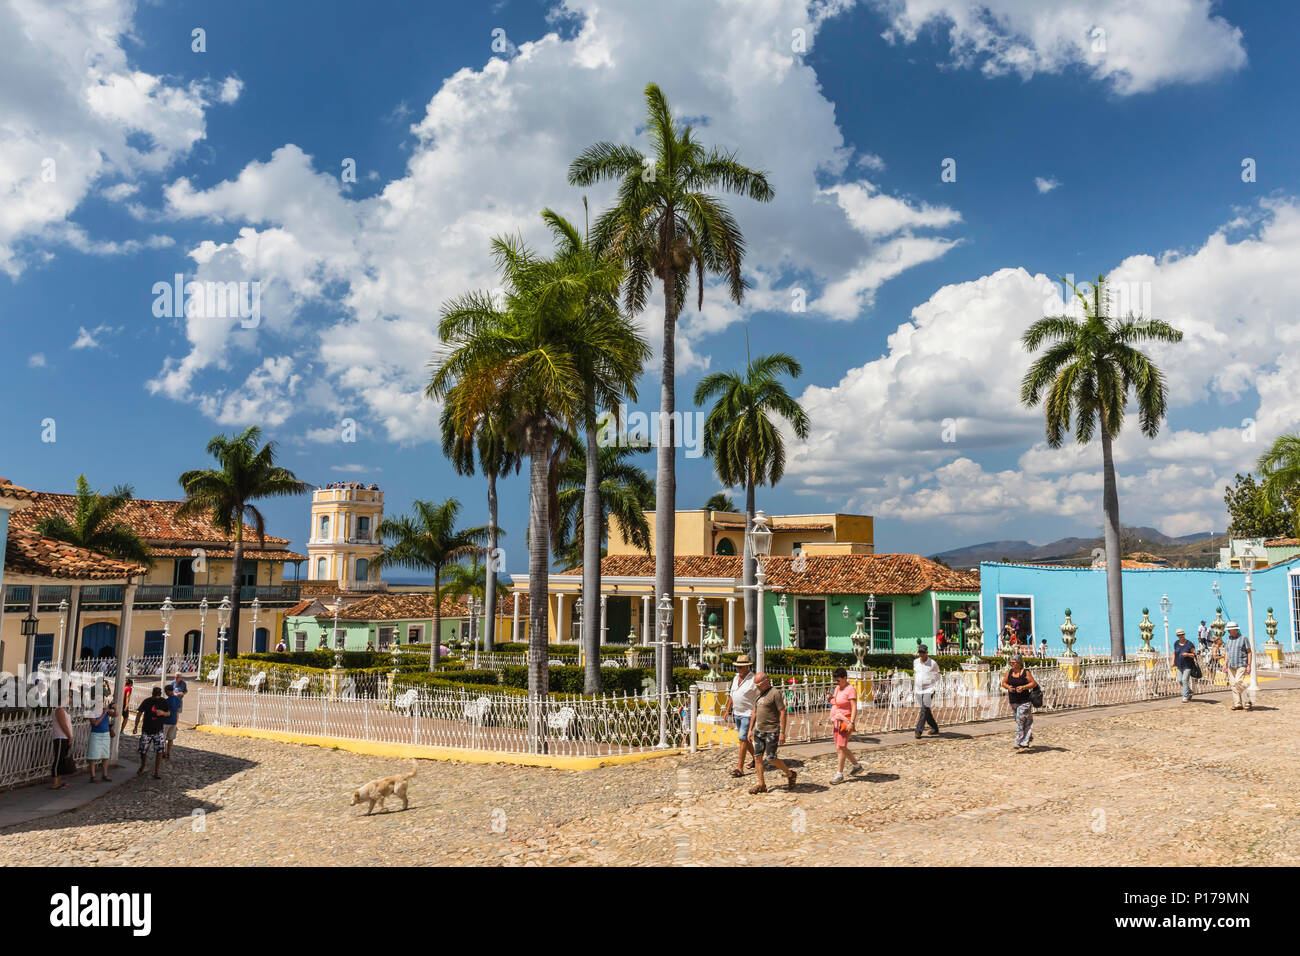 Ein Blick auf die Plaza Mayor in der UNESCO Weltkulturerbe Stadt Trinidad, Kuba. Stockfoto